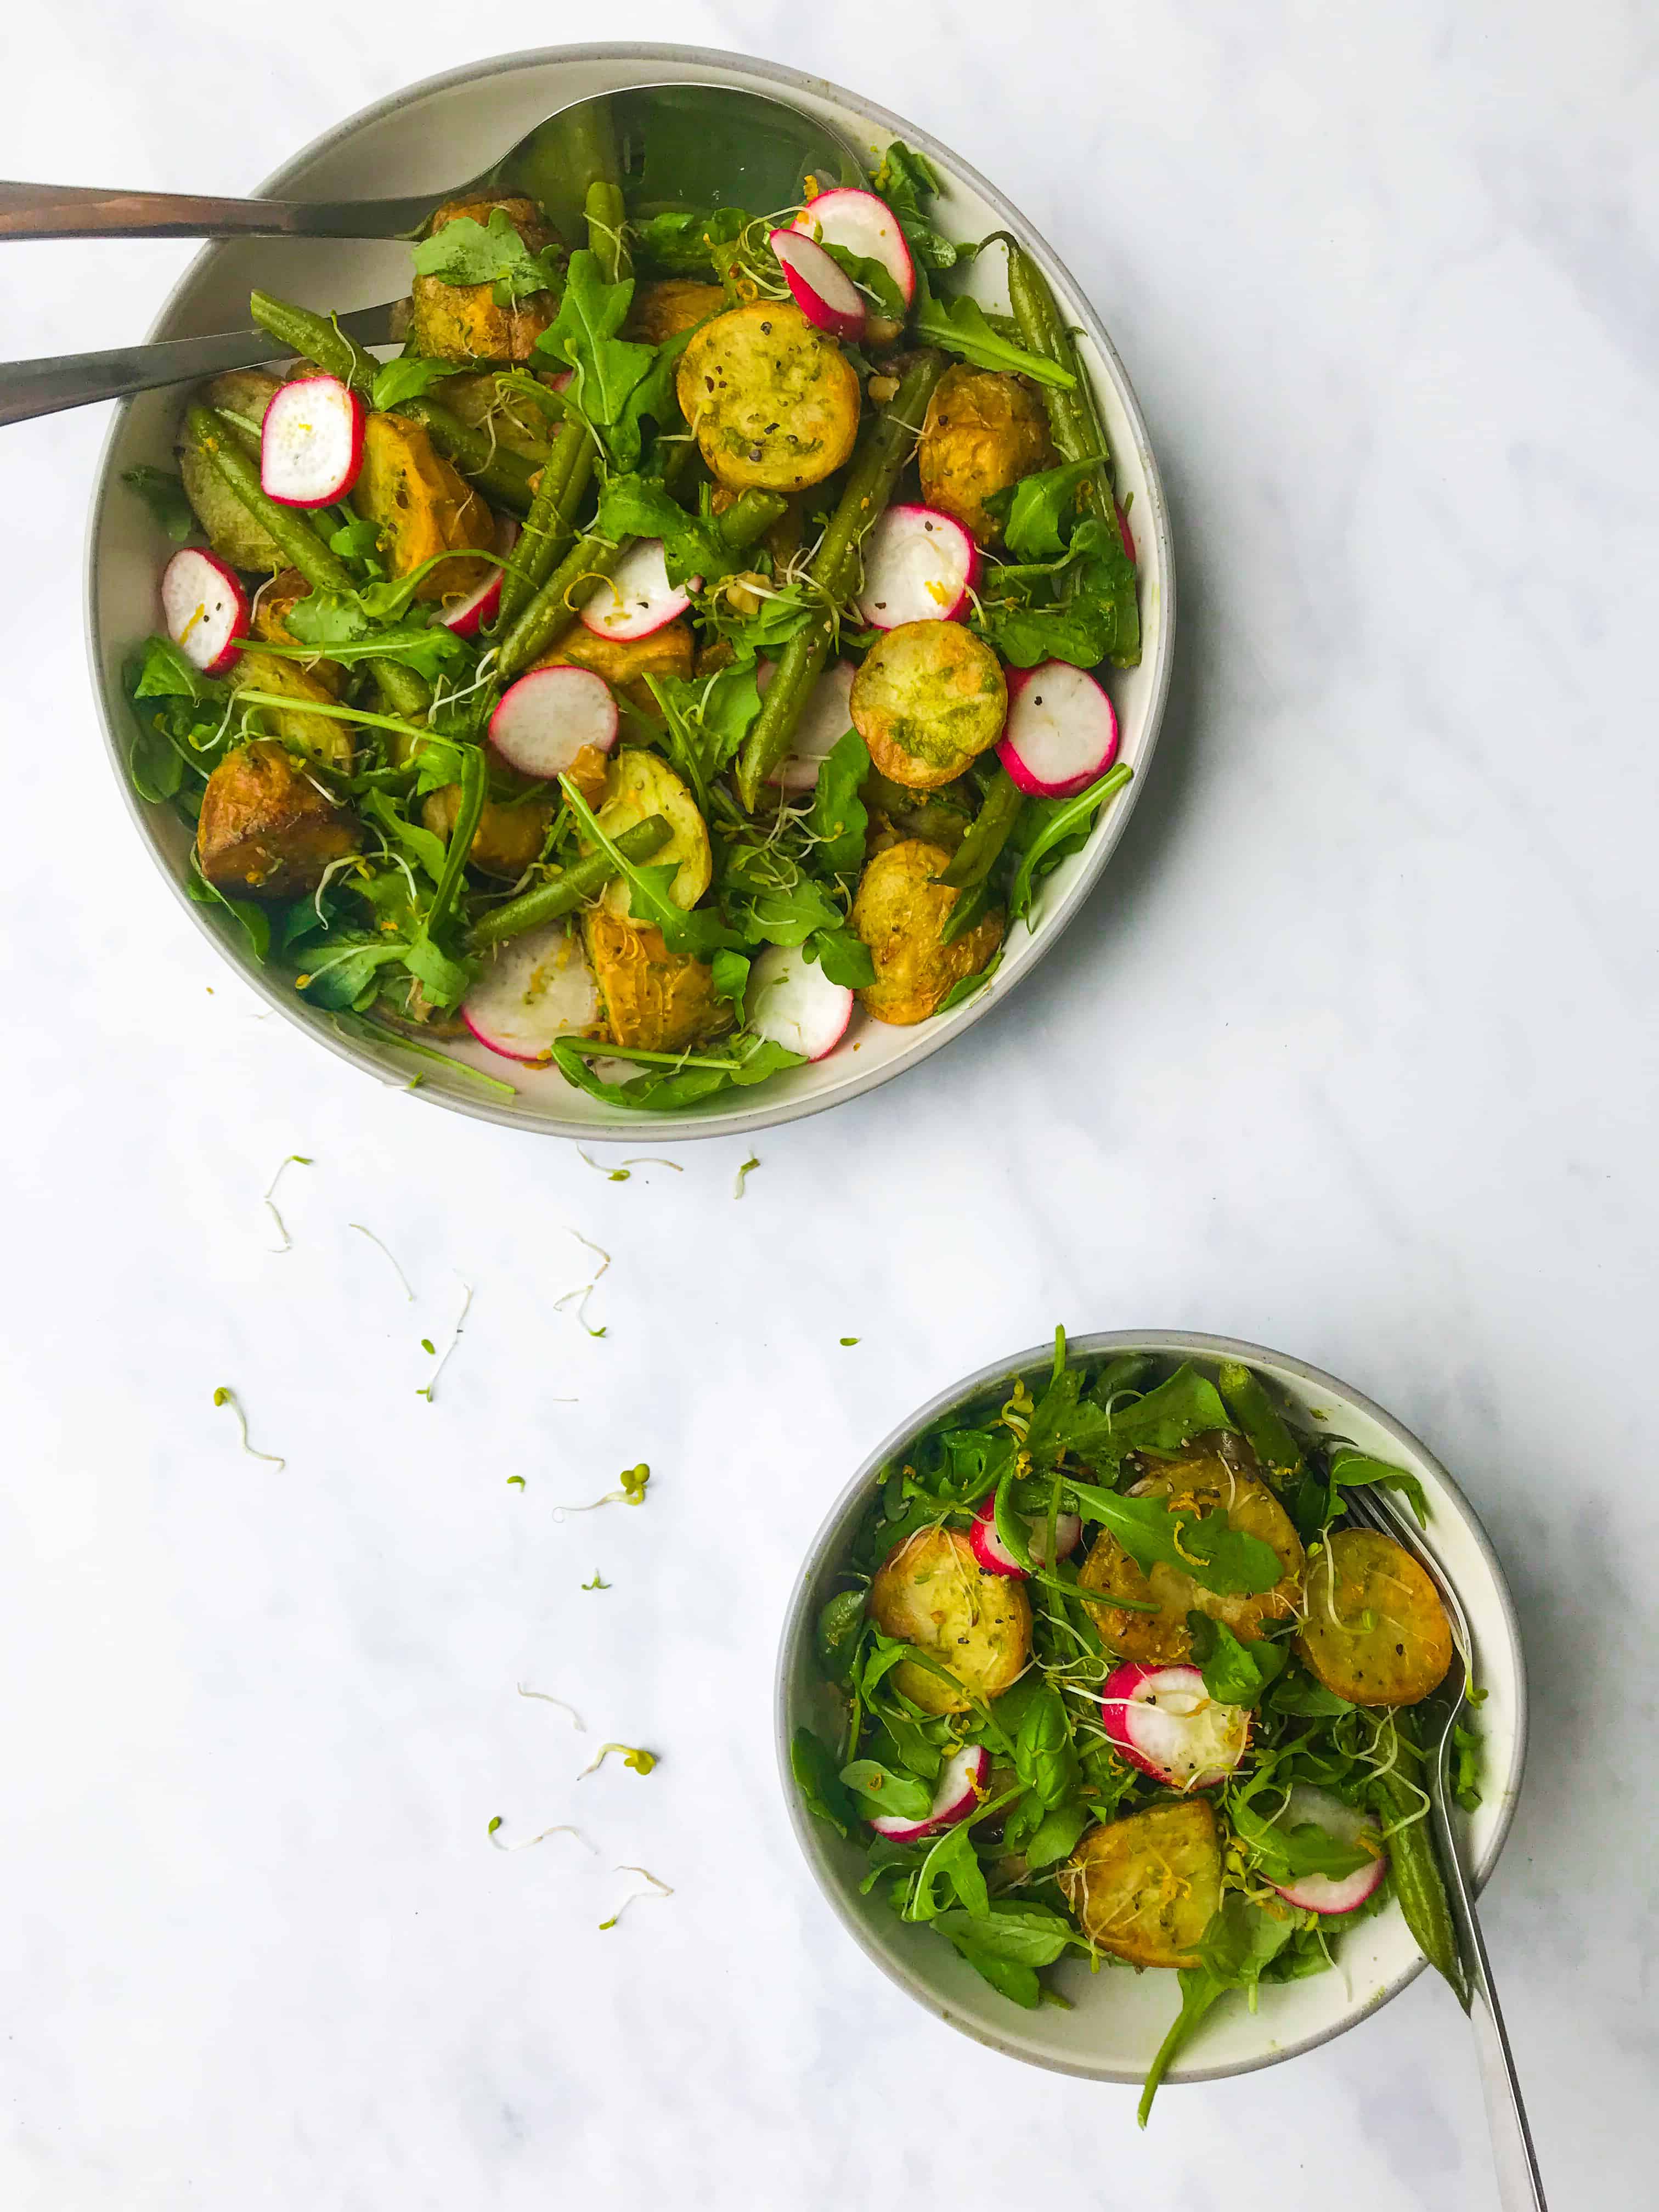 Walnut Pesto Potato Salad with Green Beans & Radish. Vegan, GF & Healthy!